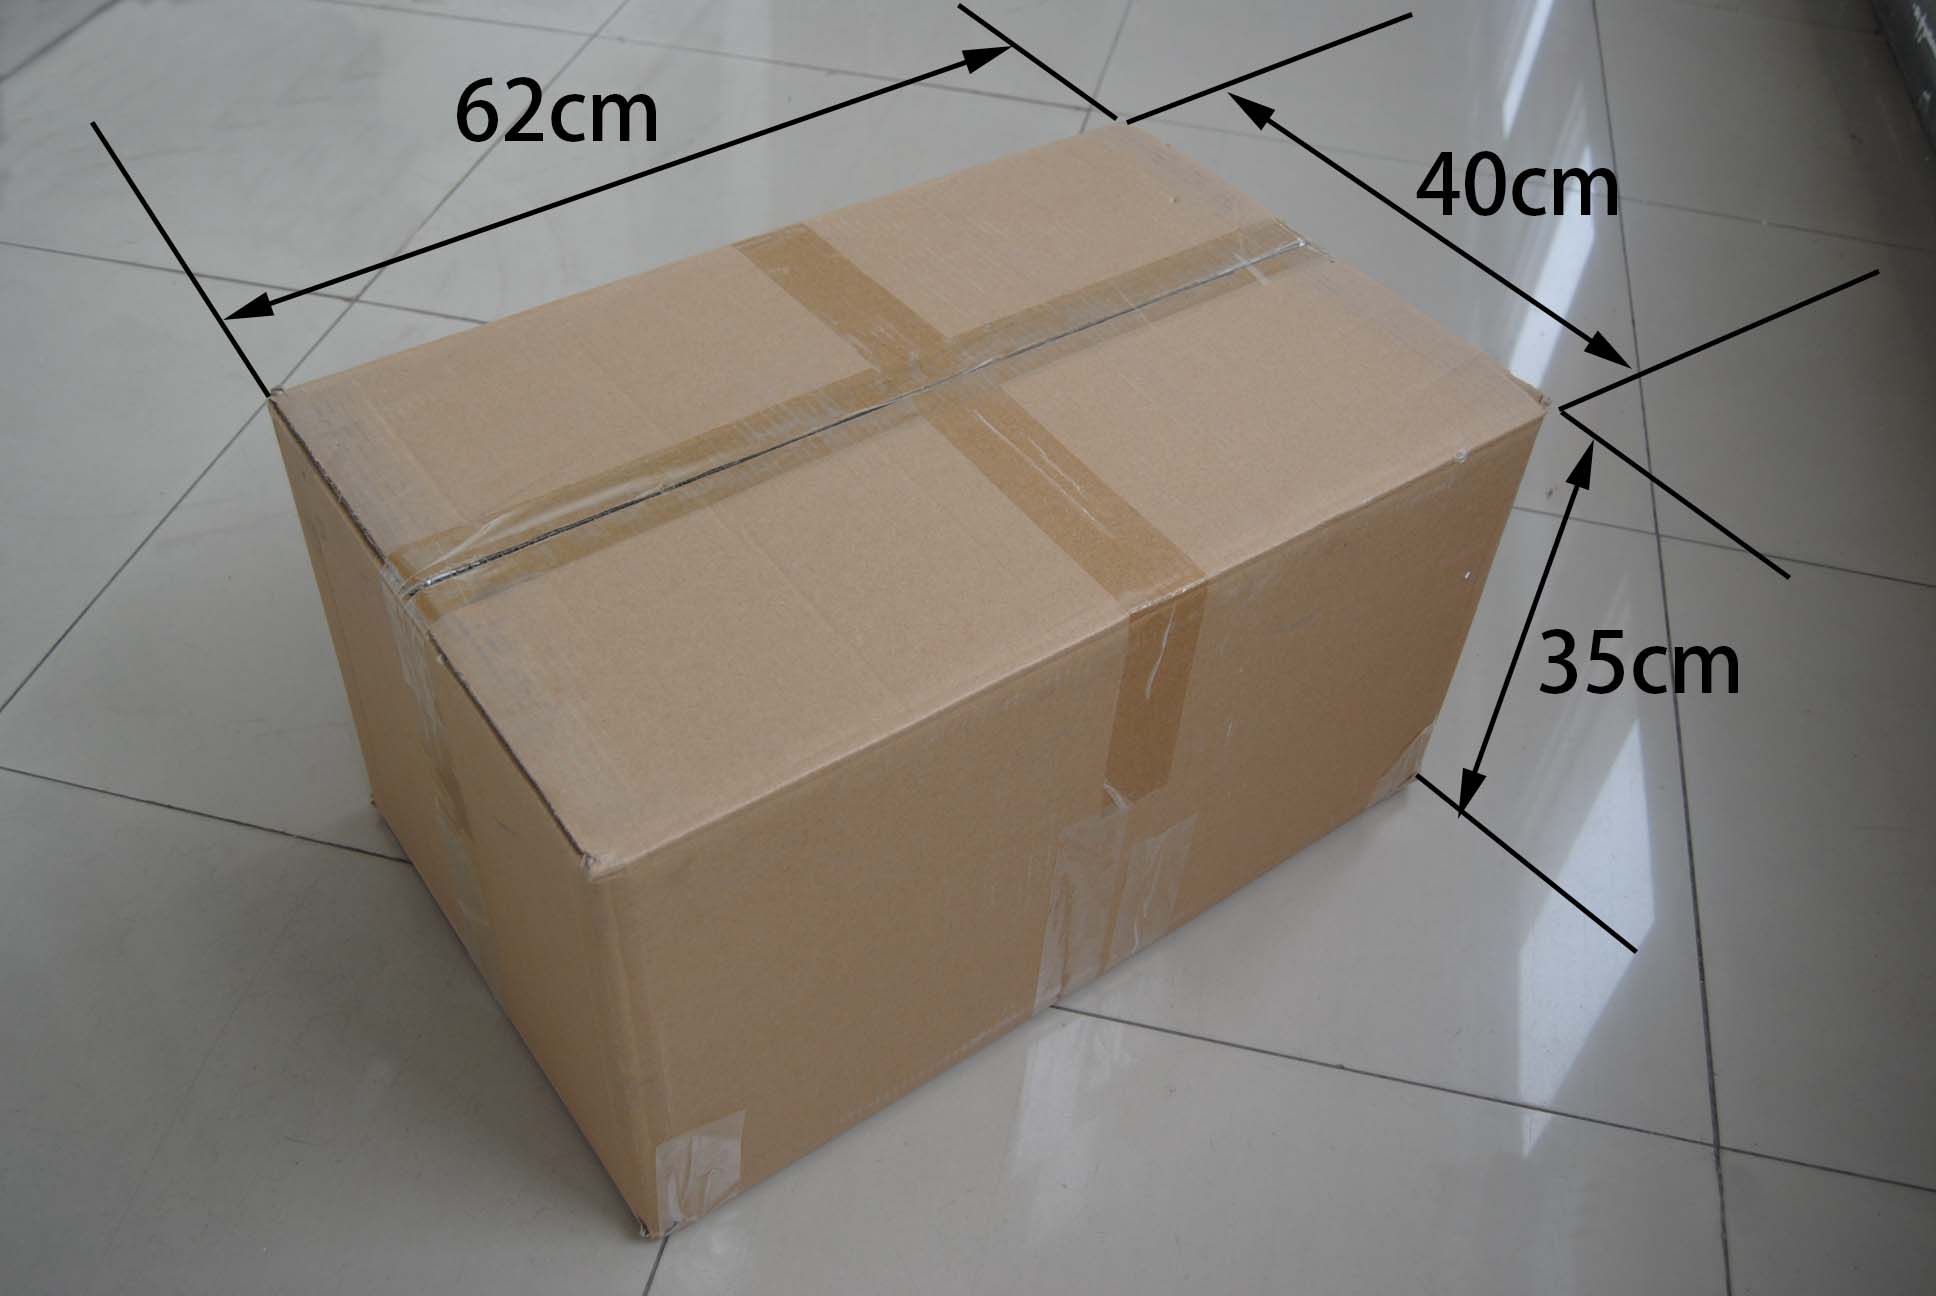 Carton dimensions